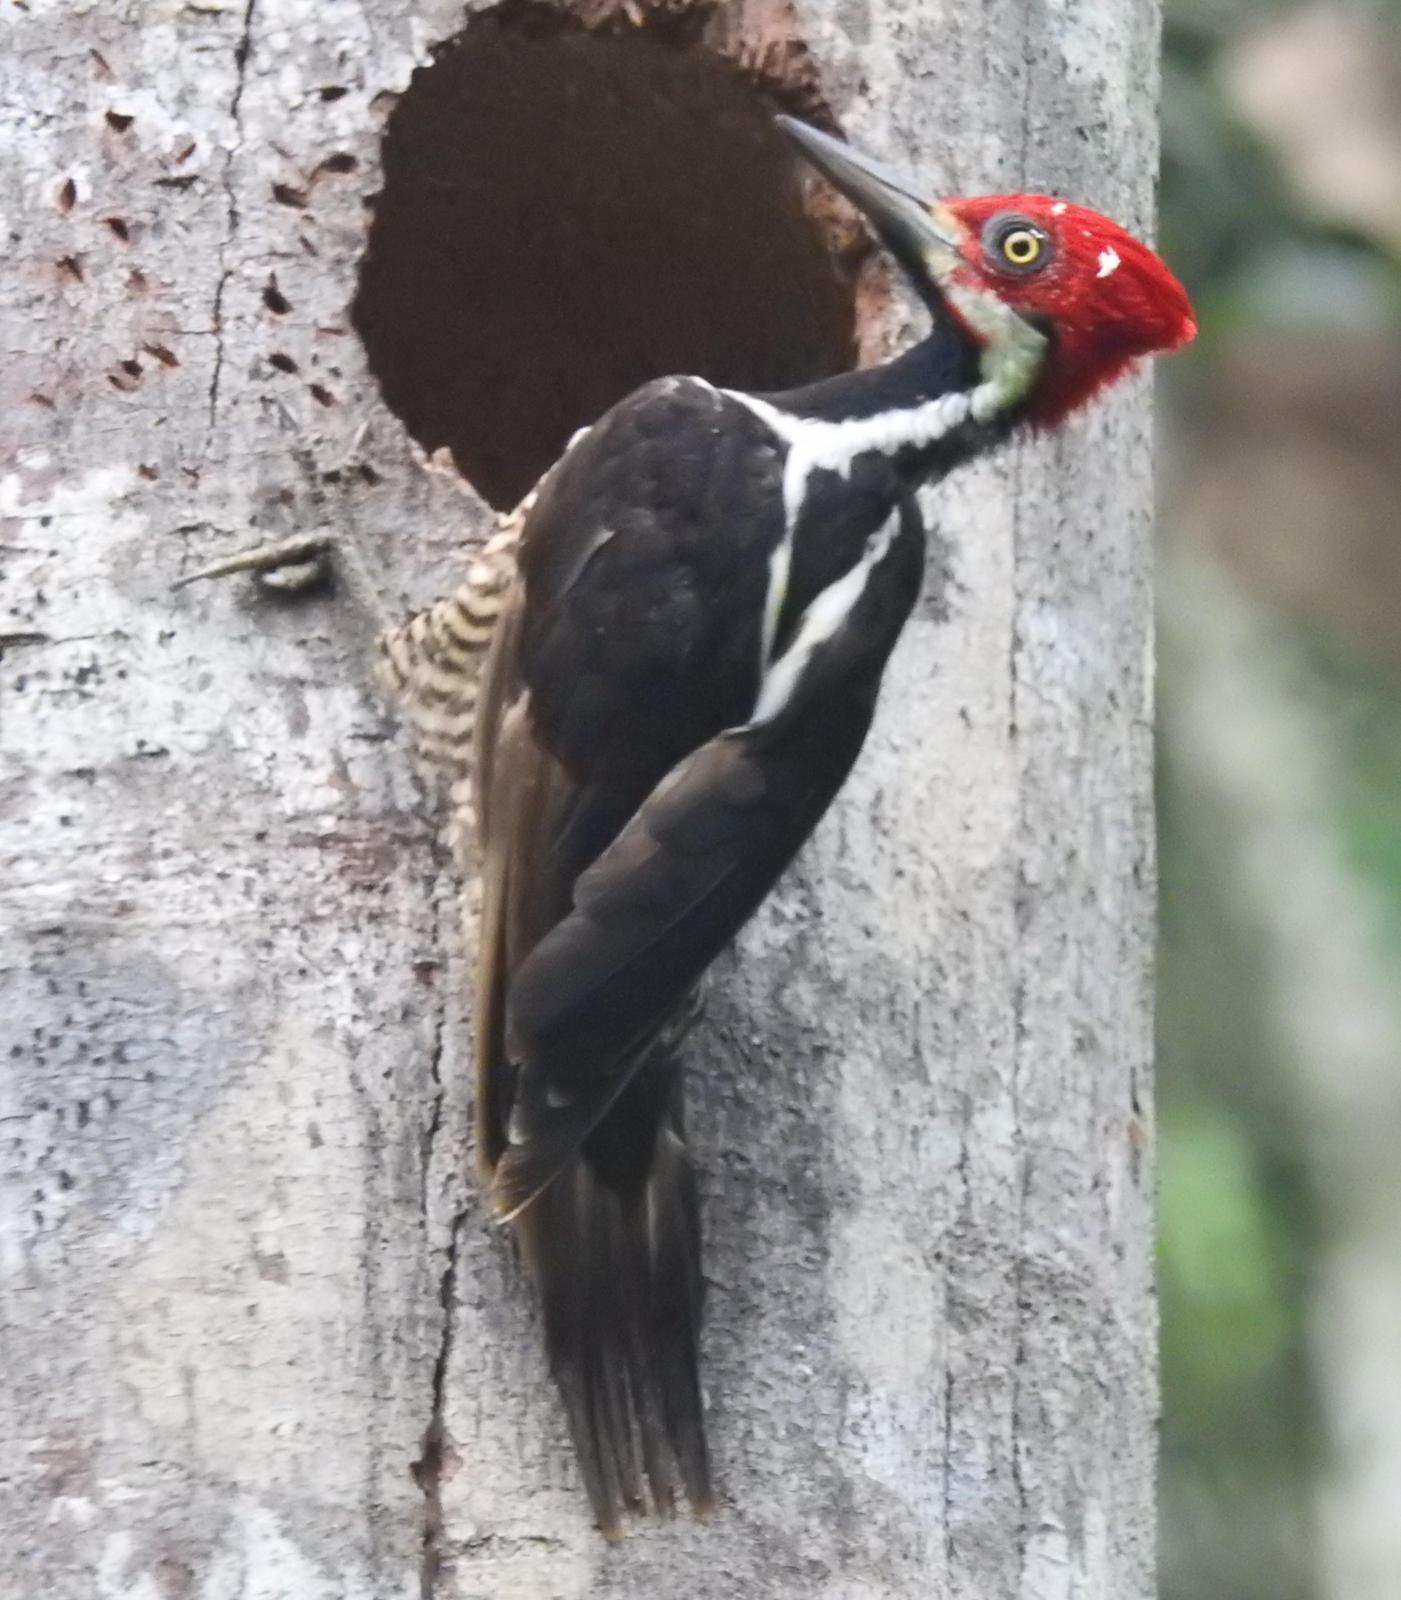 Guayaquil Woodpecker Photo by John Licharson